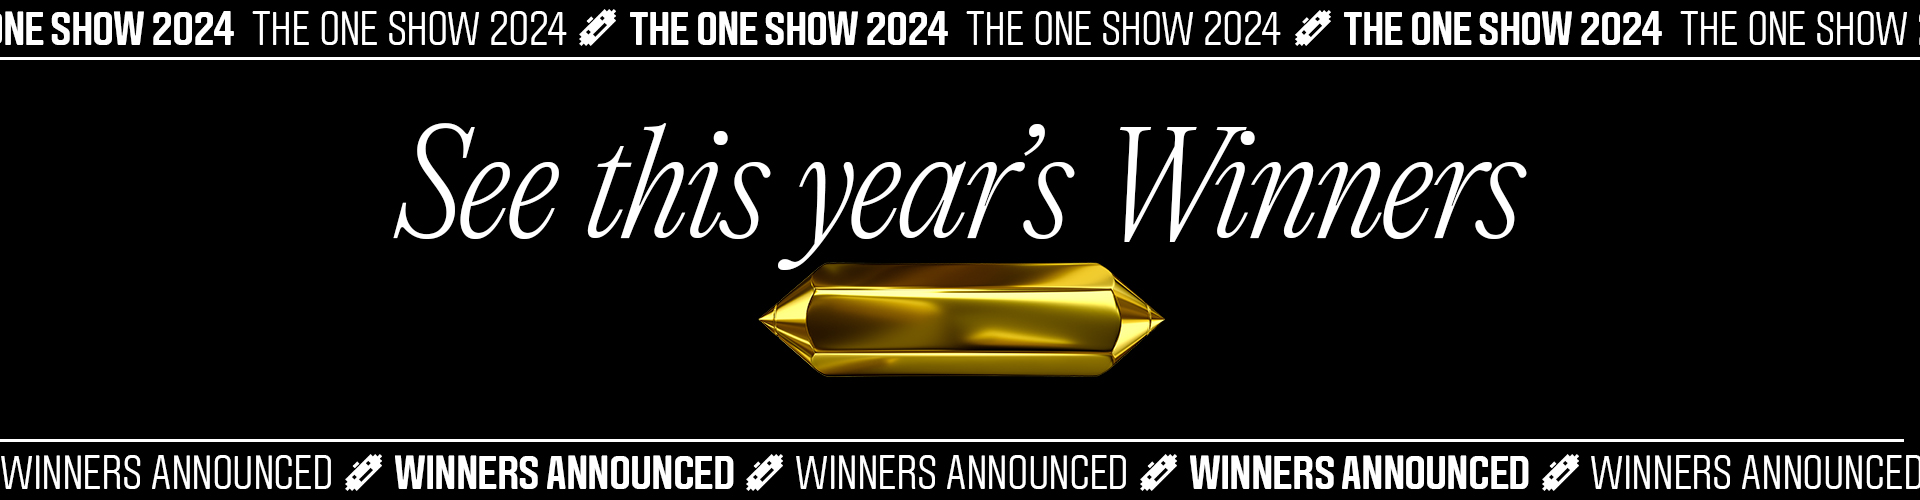 One Show Winners